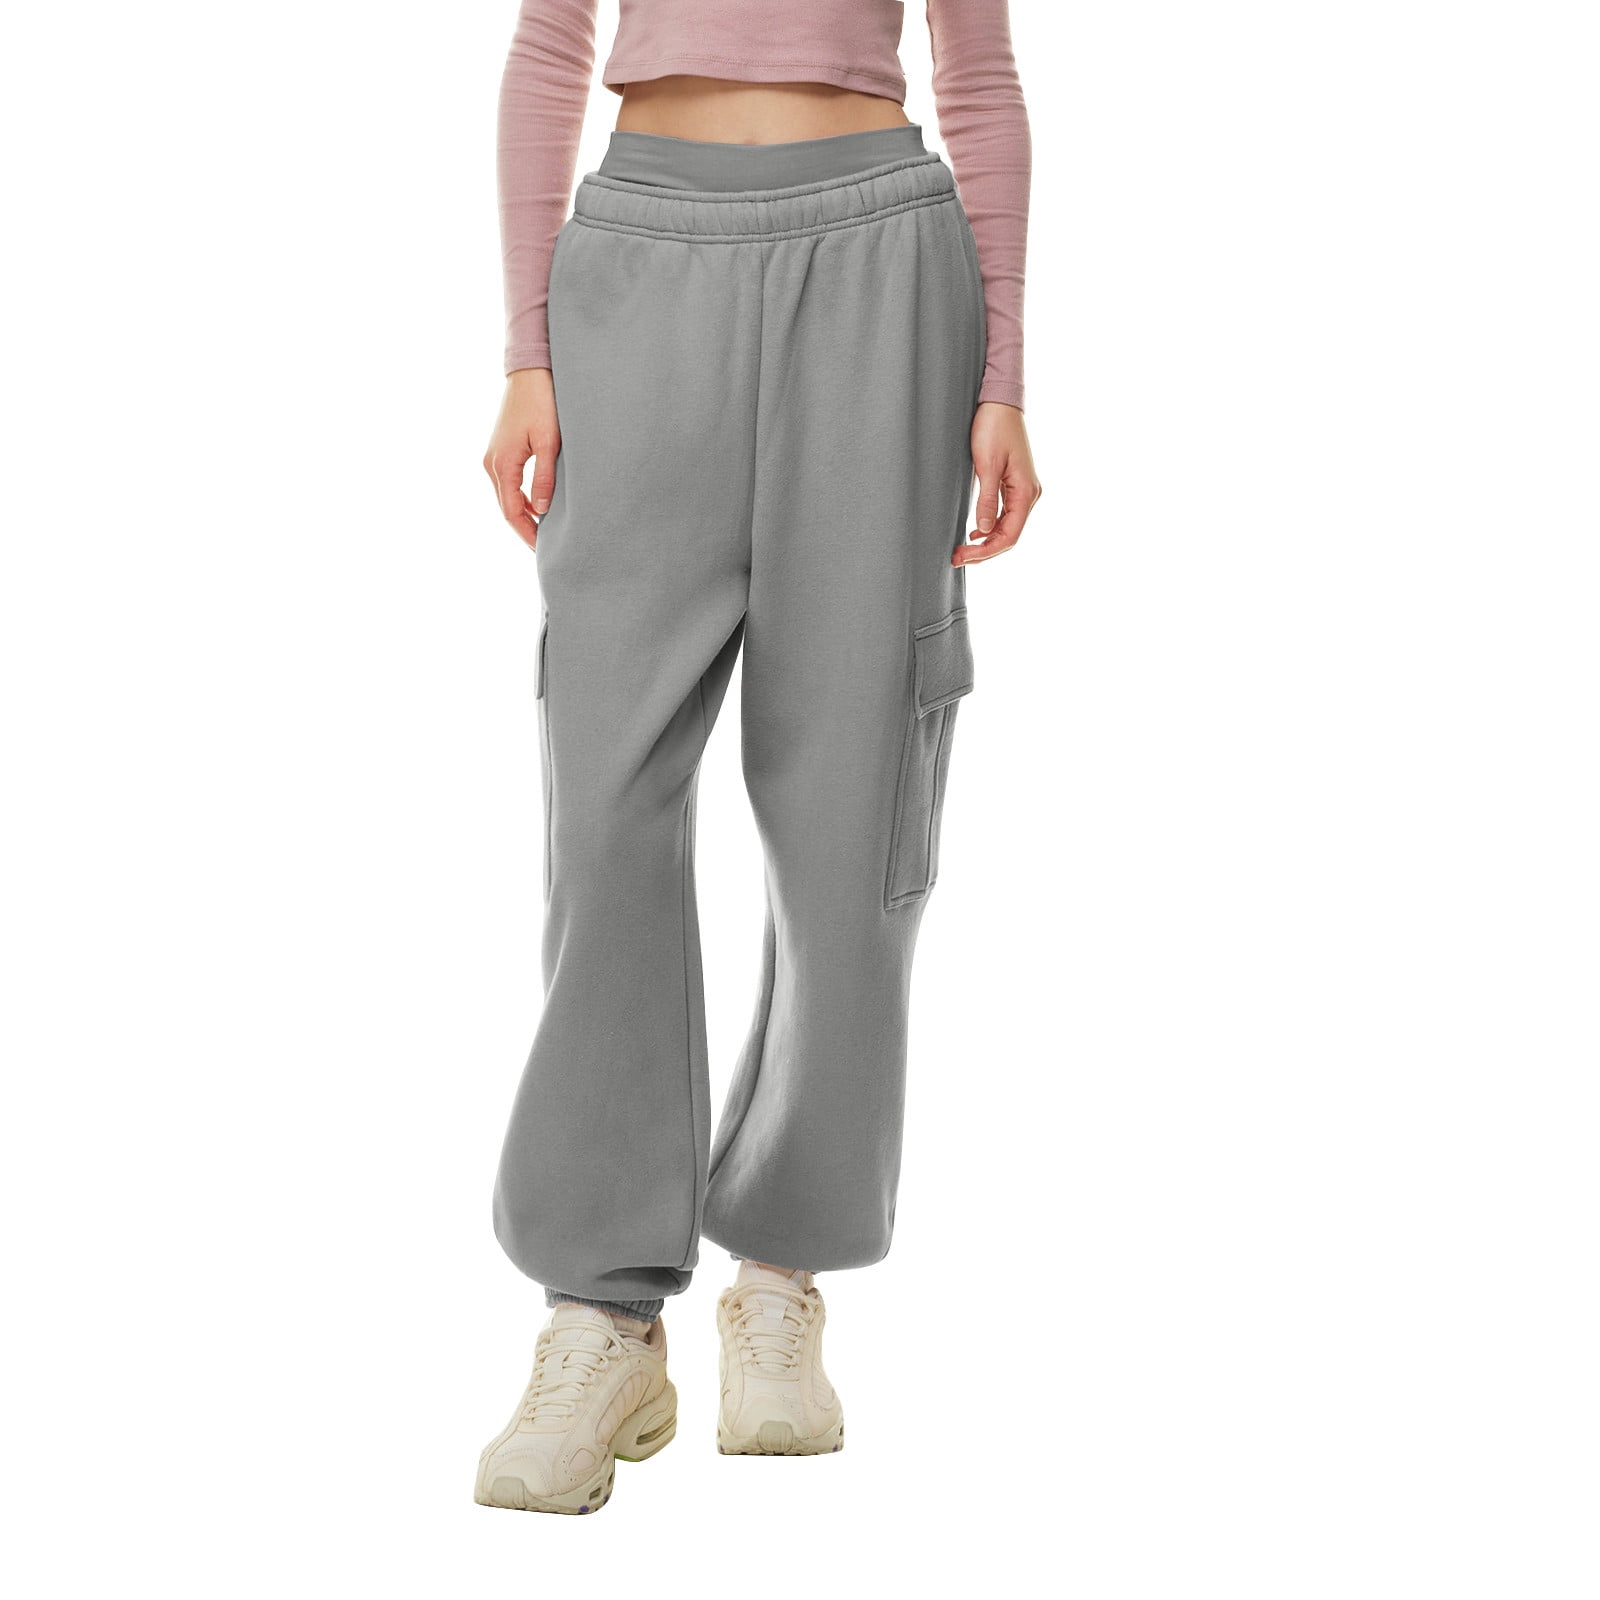 Qcmgmg Sweatpants for Teen Girls Baggy Long Fleece Lined Casual